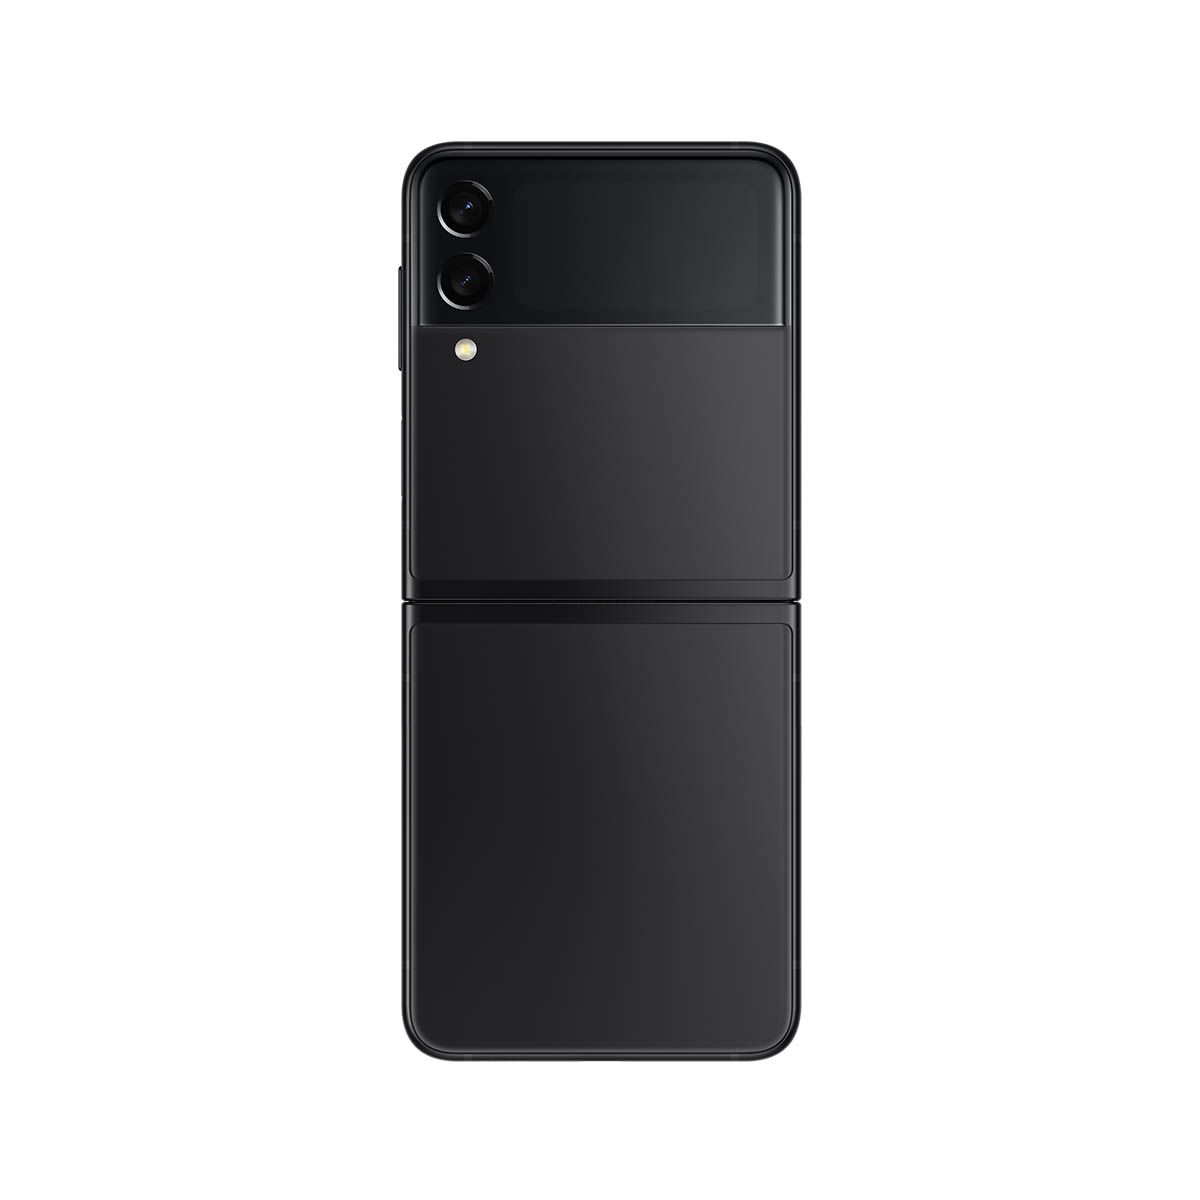 Samsung Folding Smartphone Galaxy Z Flip3 5G 256GB 5G 1.9" & 6.7" Display Black